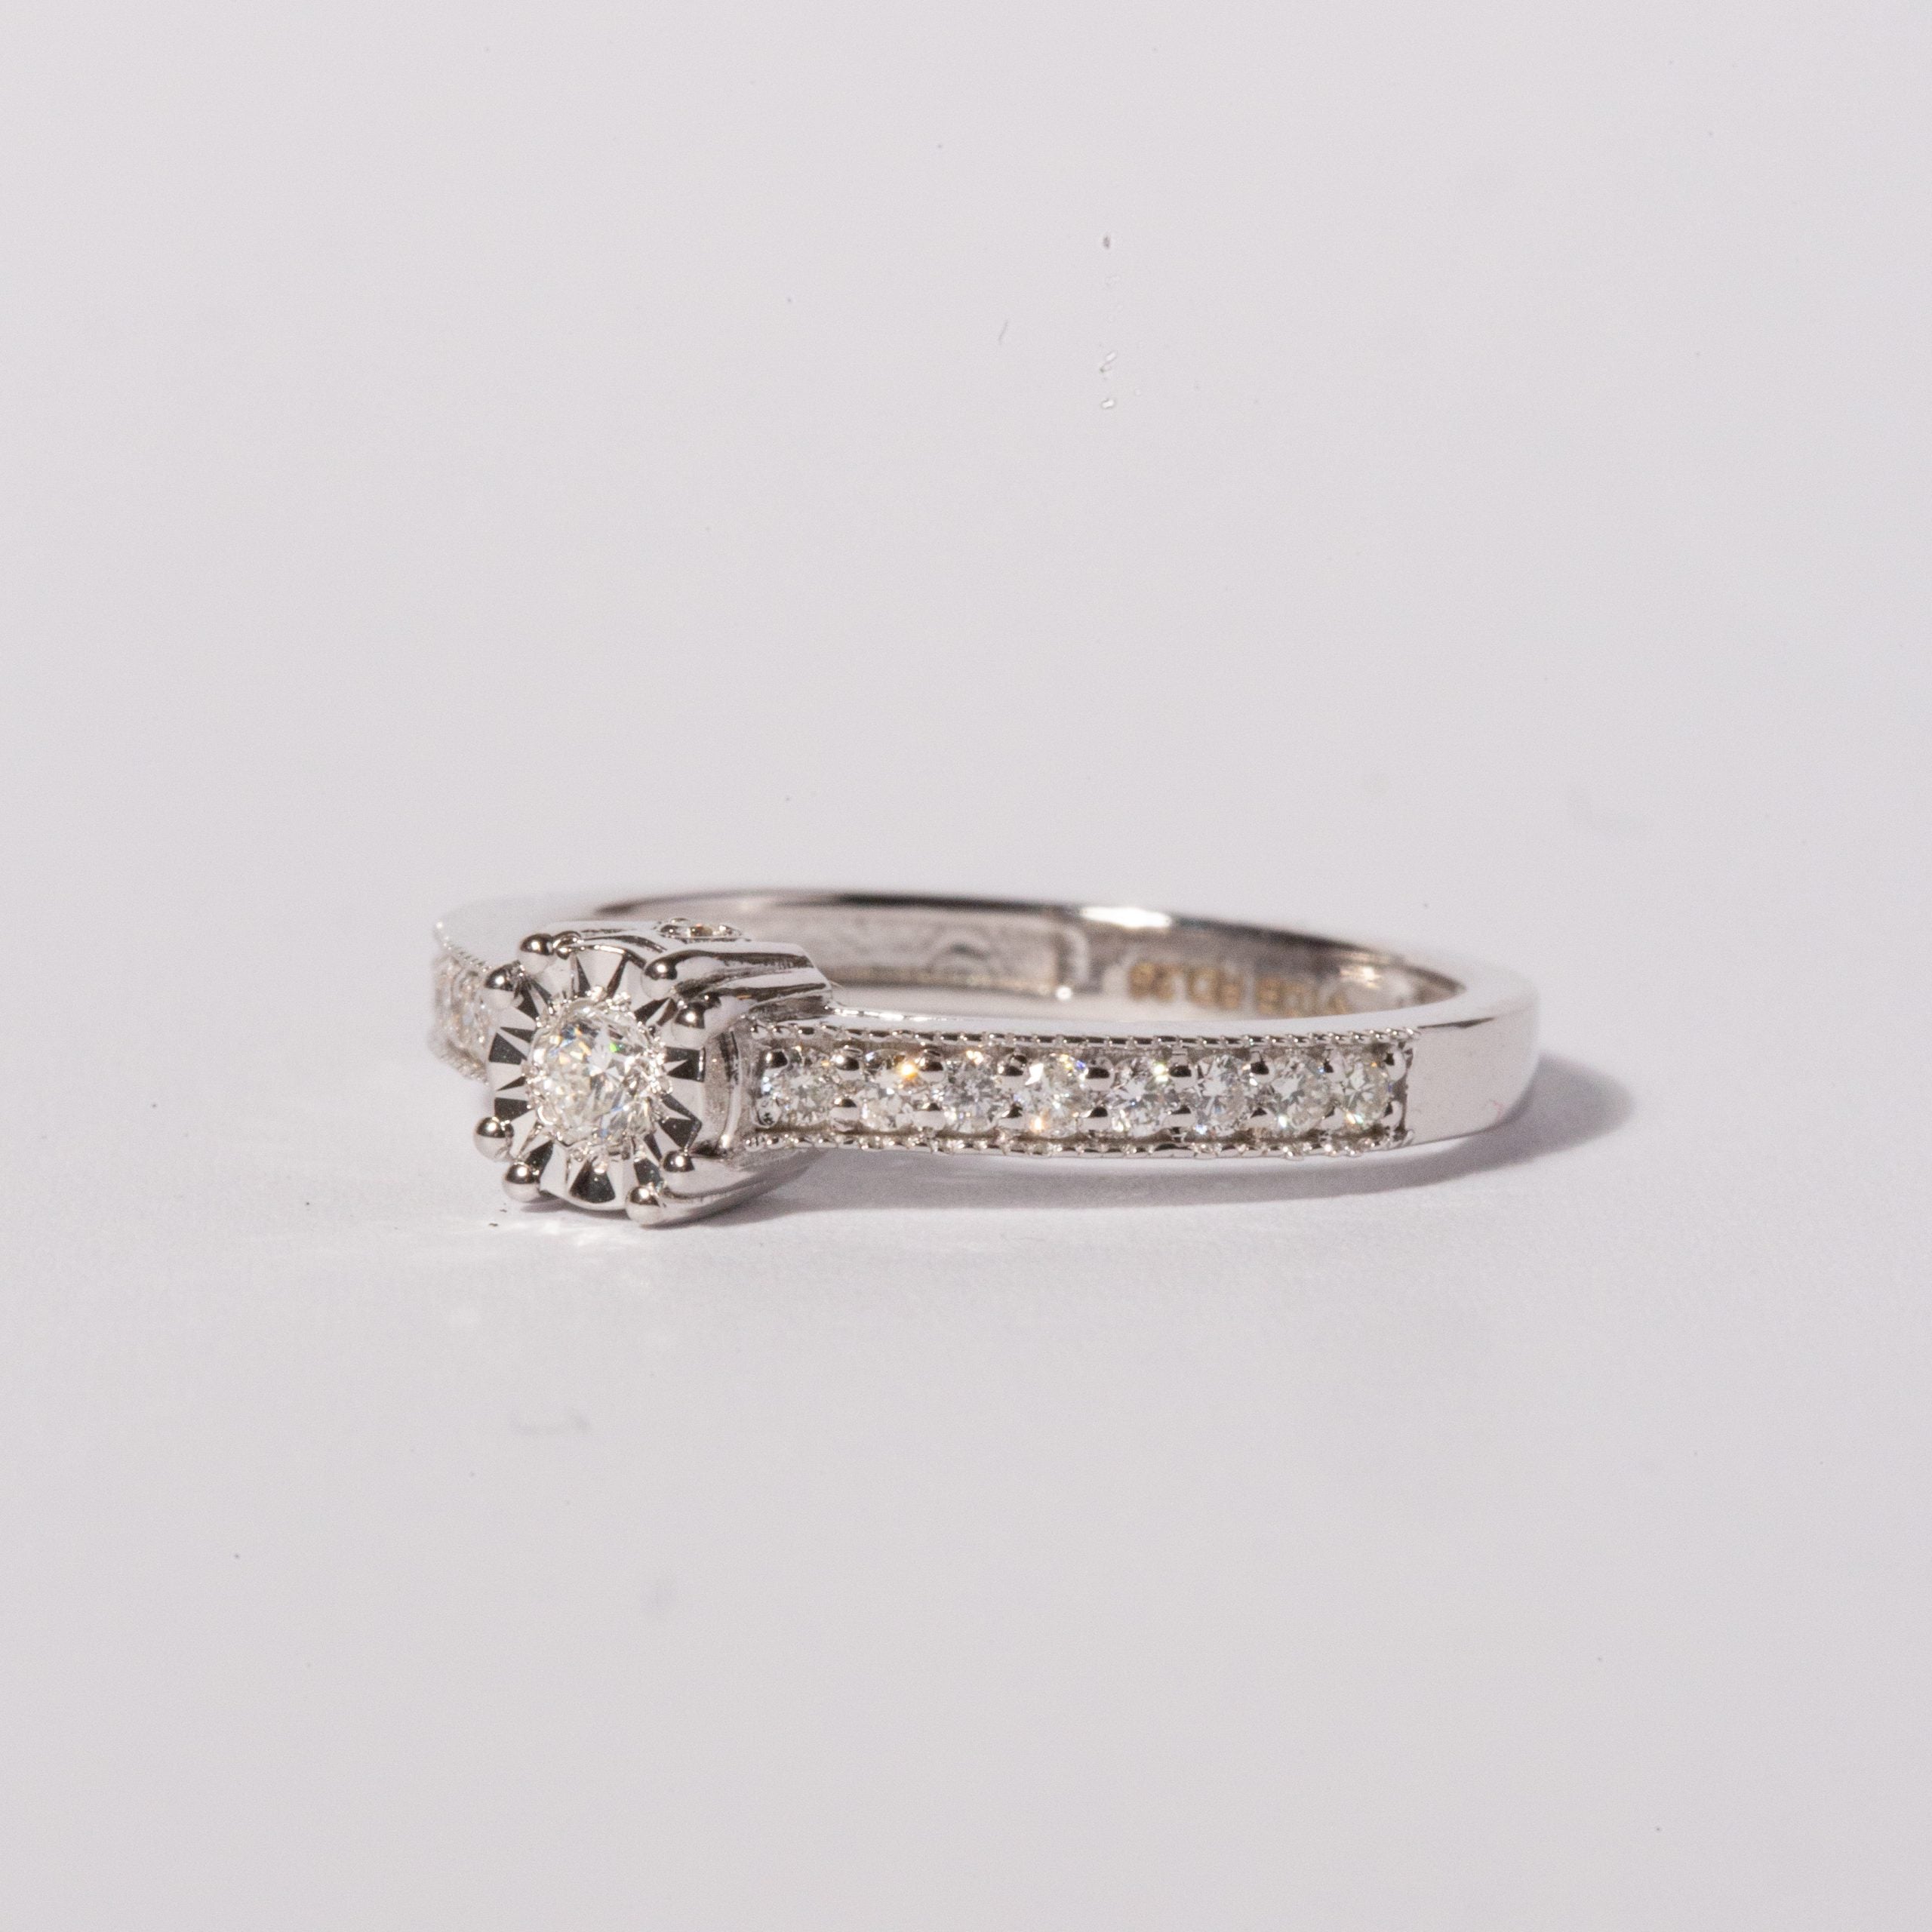 9ct White Gold Ladies Diamond Cluster Engagement Ring - 1102722